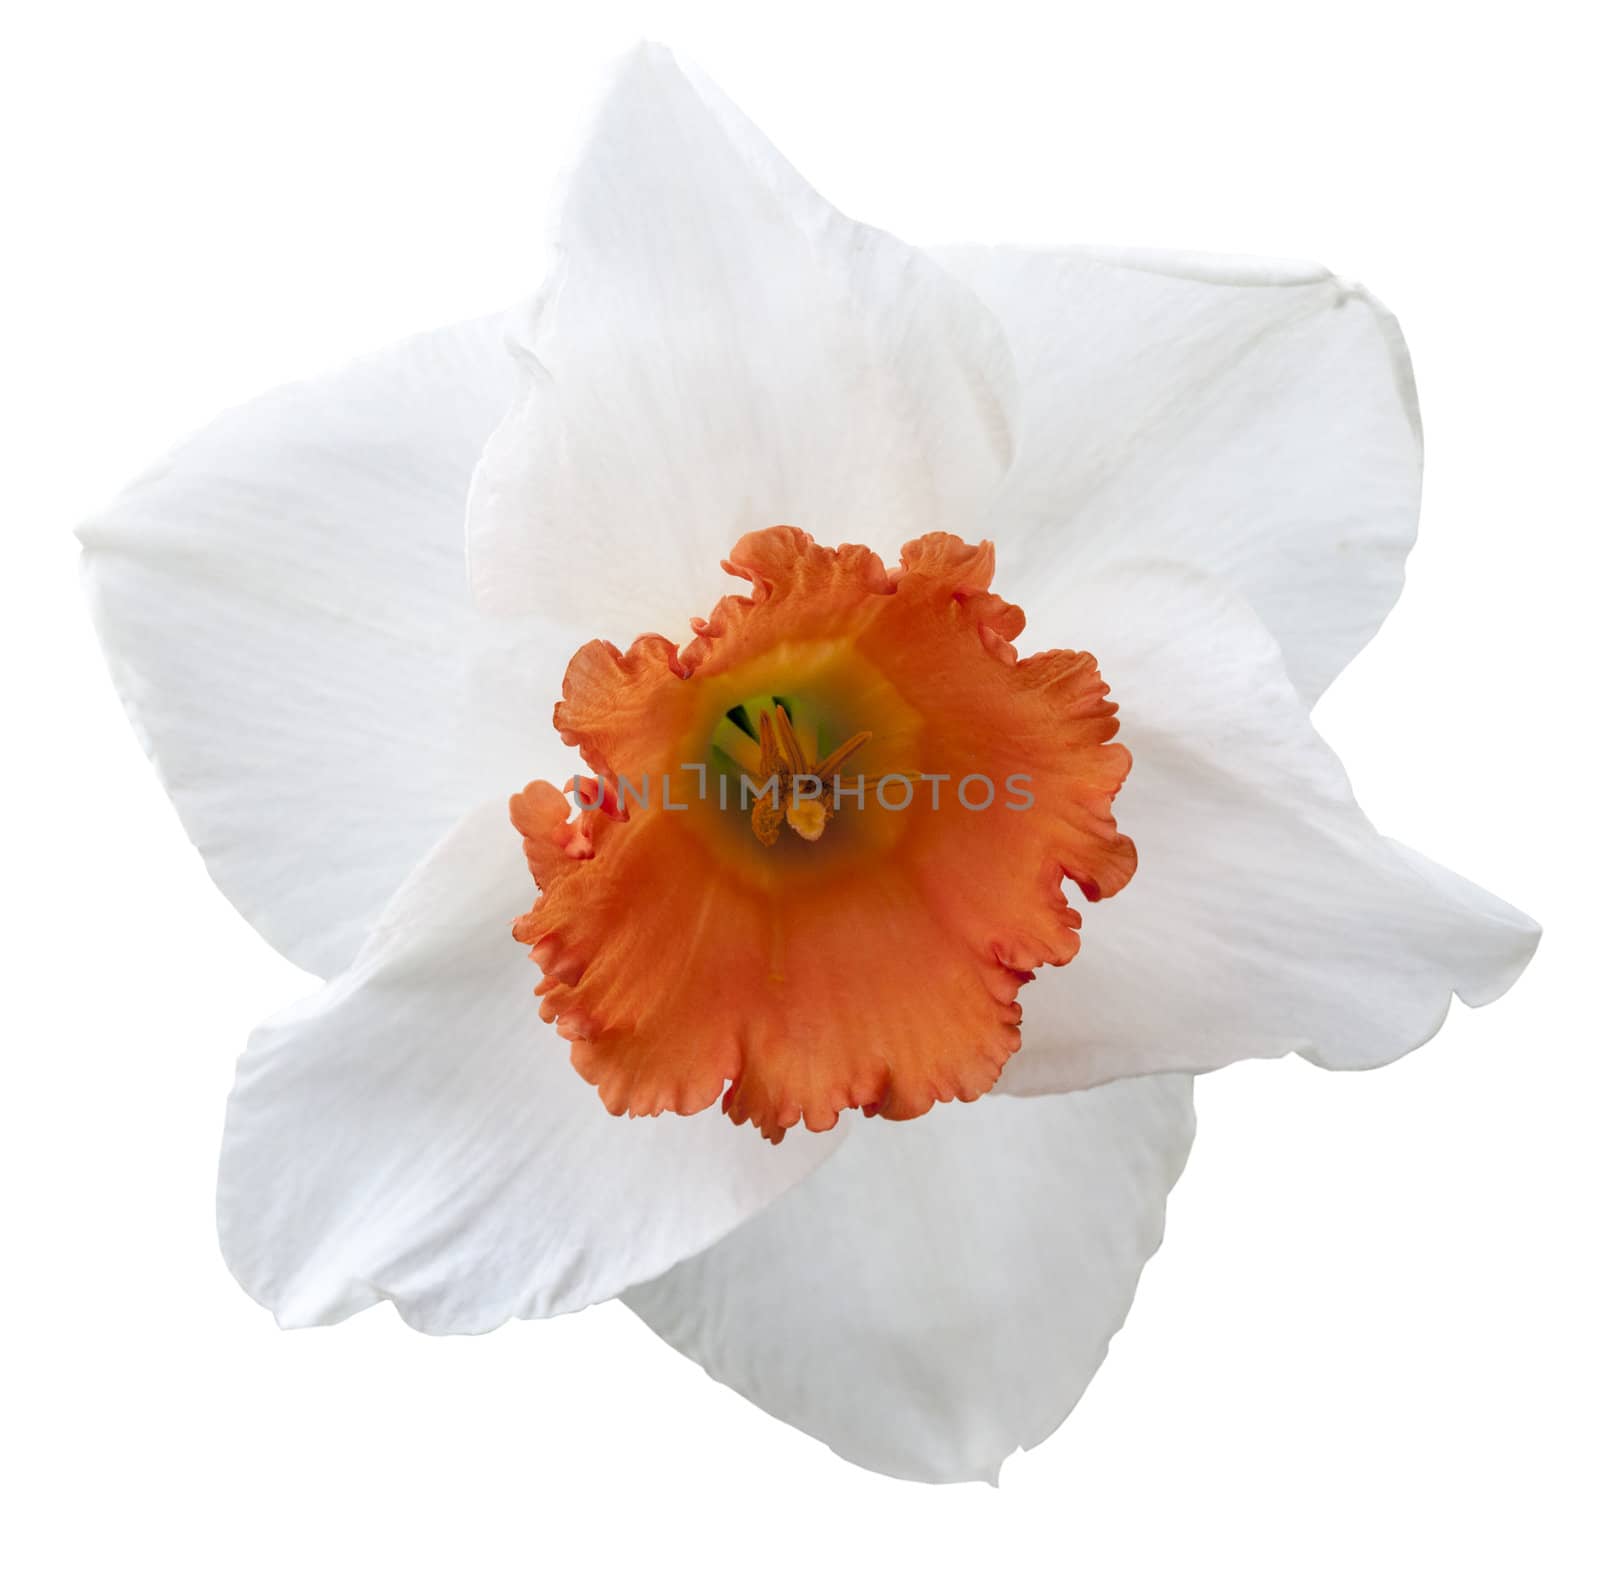 Daffodil- Design Element by RazvanPhotography